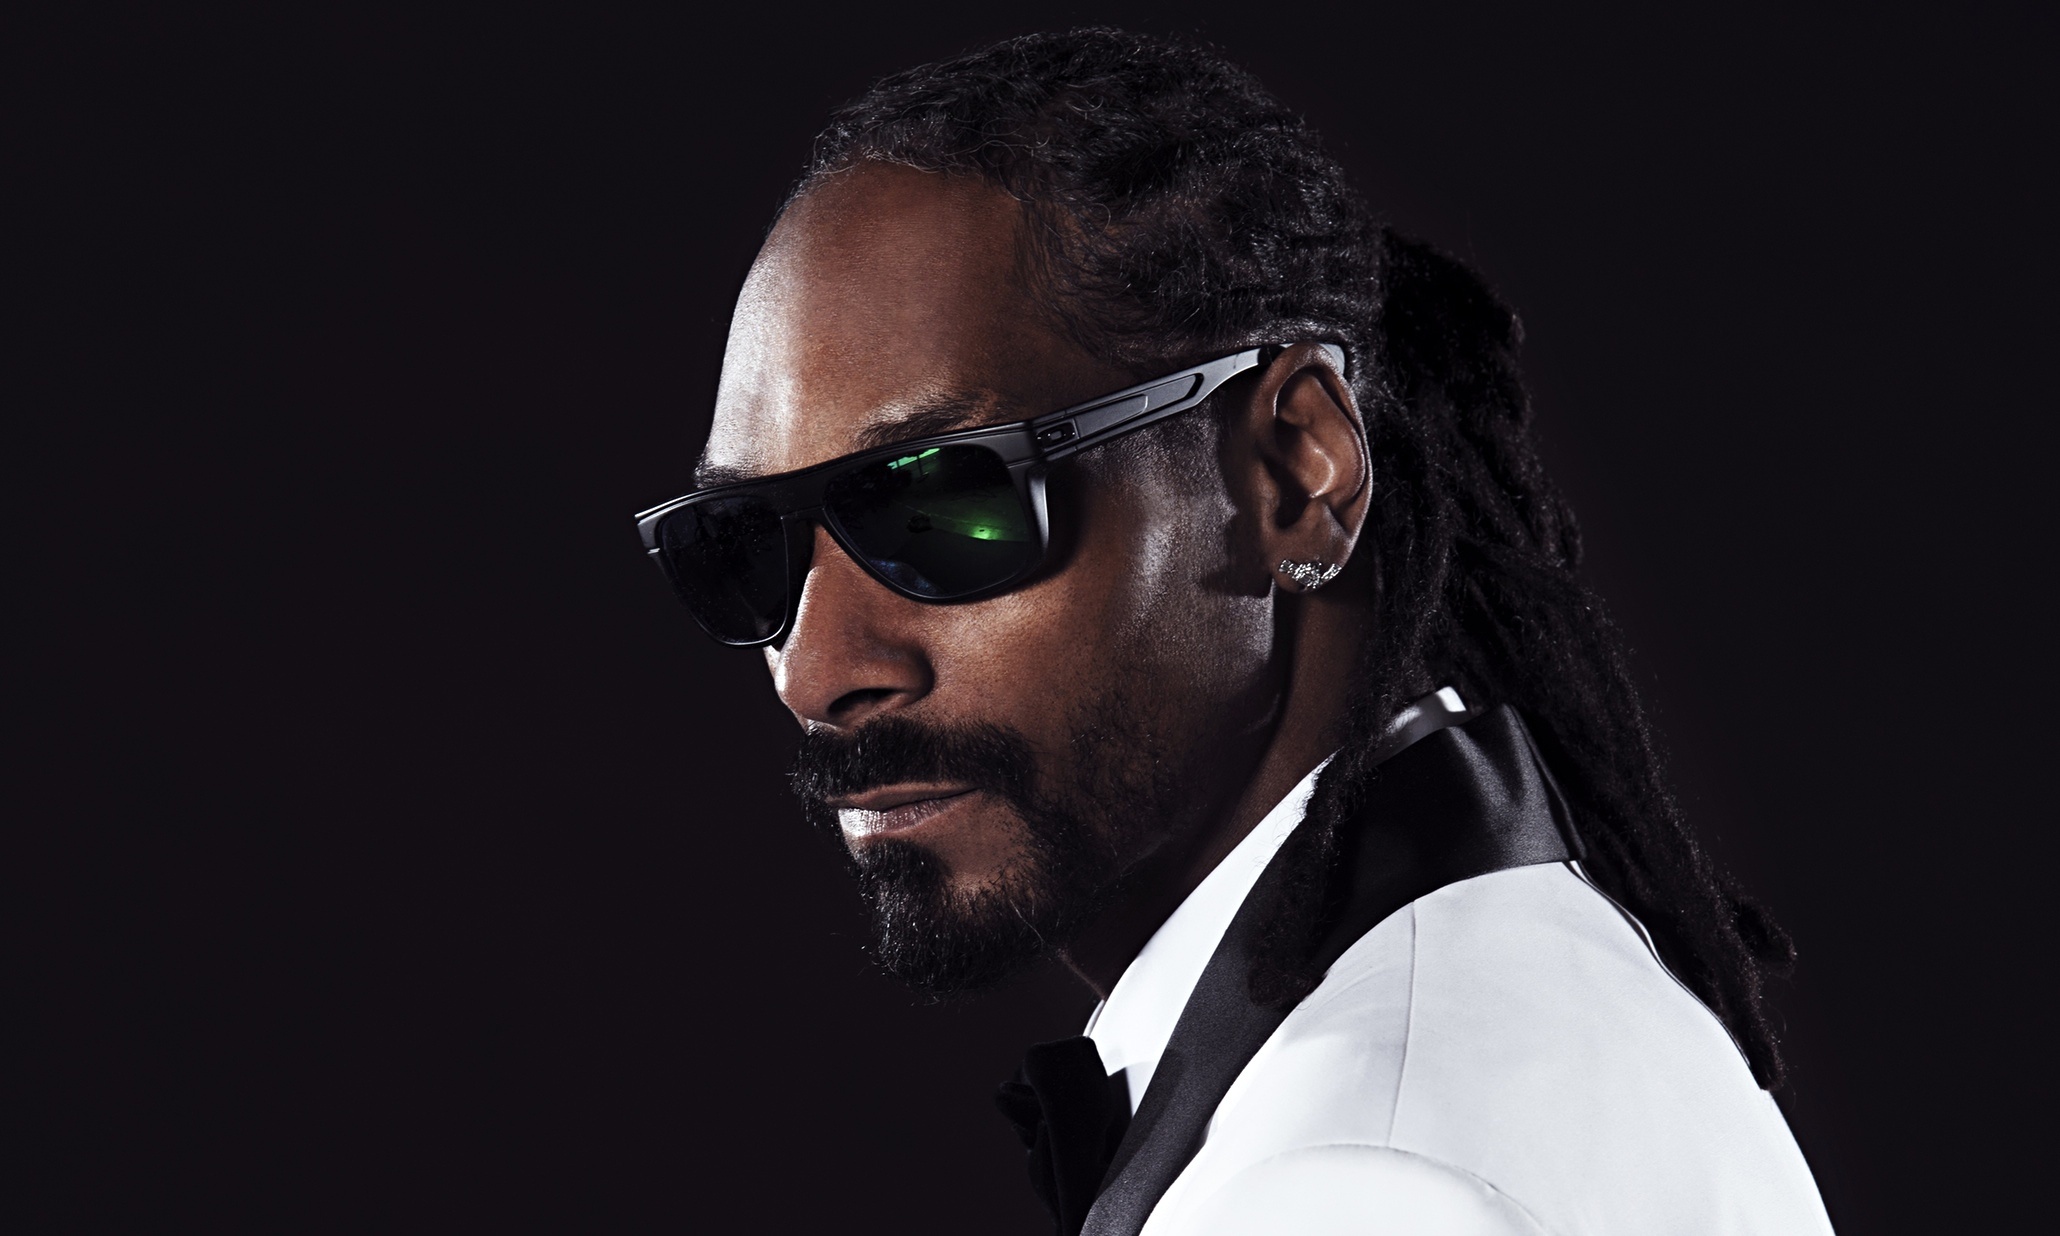 Snoop Dogg, Celebrity wallpaper, HD image, Stylish portrayal, 2060x1240 HD Desktop